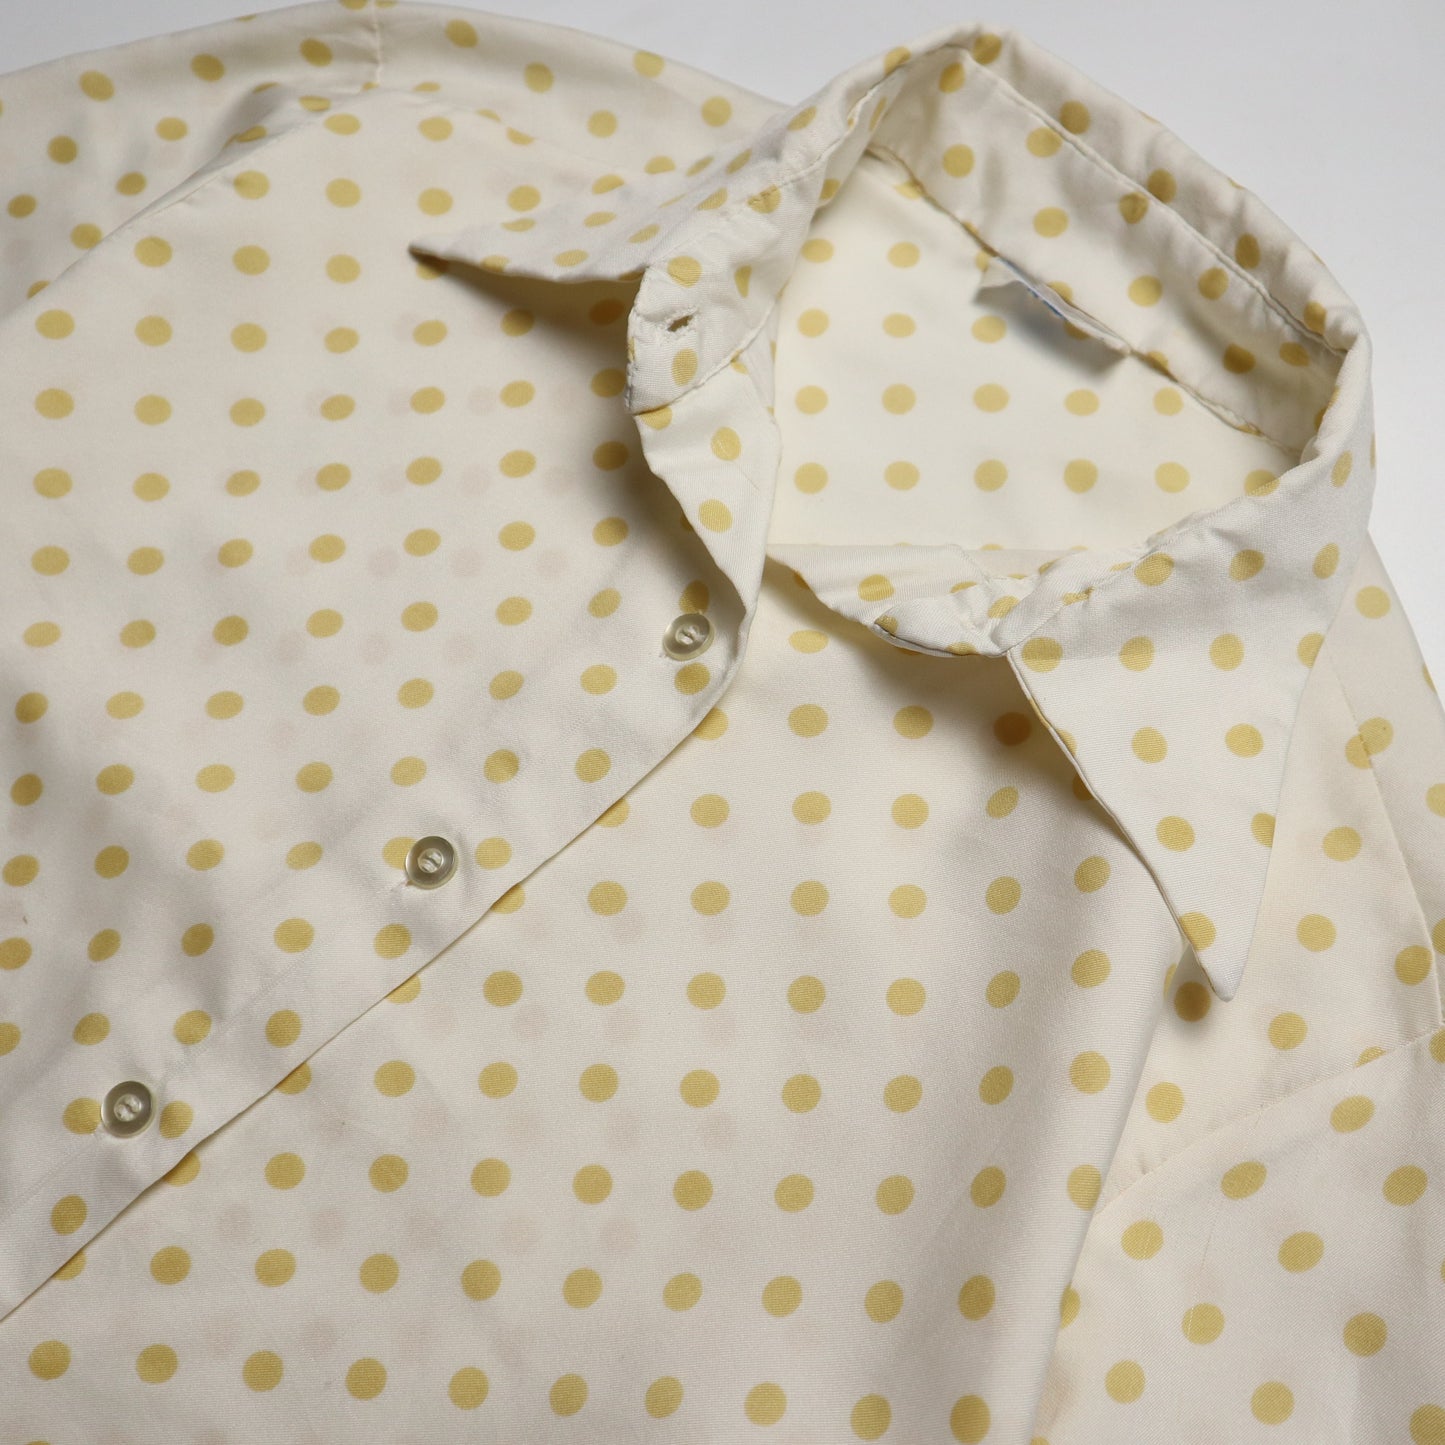 70-80s Sears 黃色點點箭領襯衫 Disco blouse